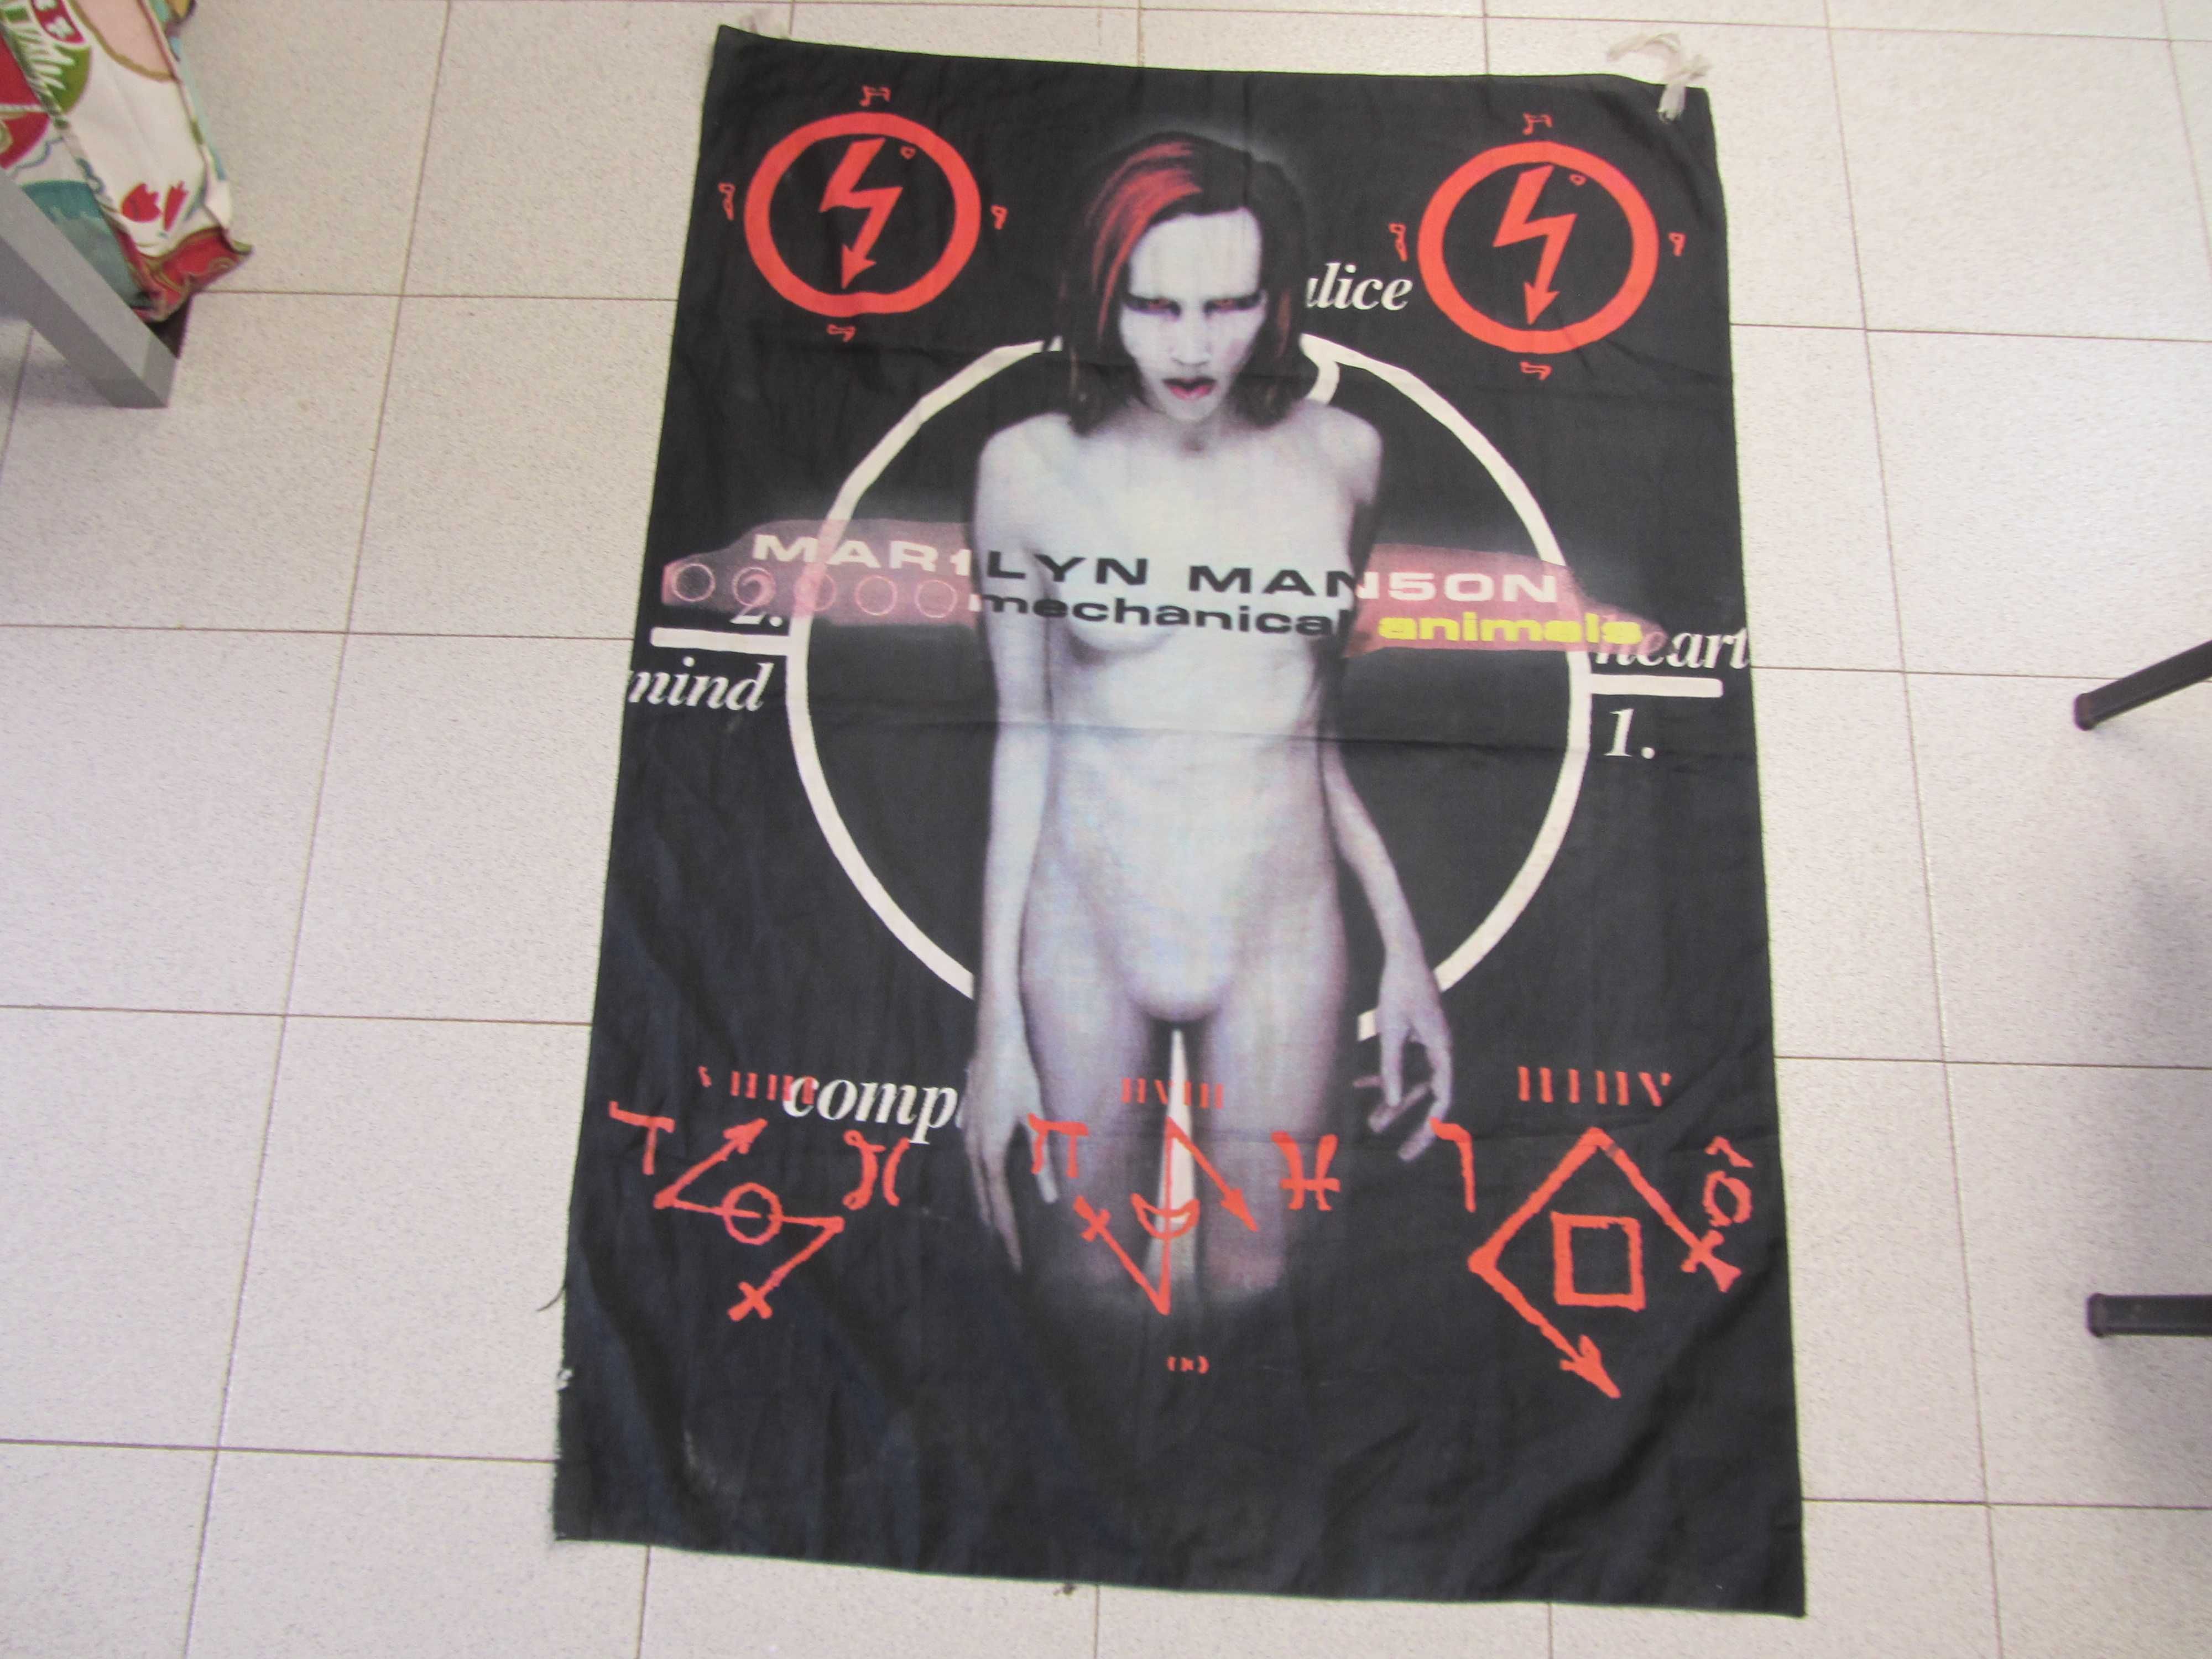 Poster Pubilitário Olá 2014, Bandeira Marilyn Manson, quadro Martini